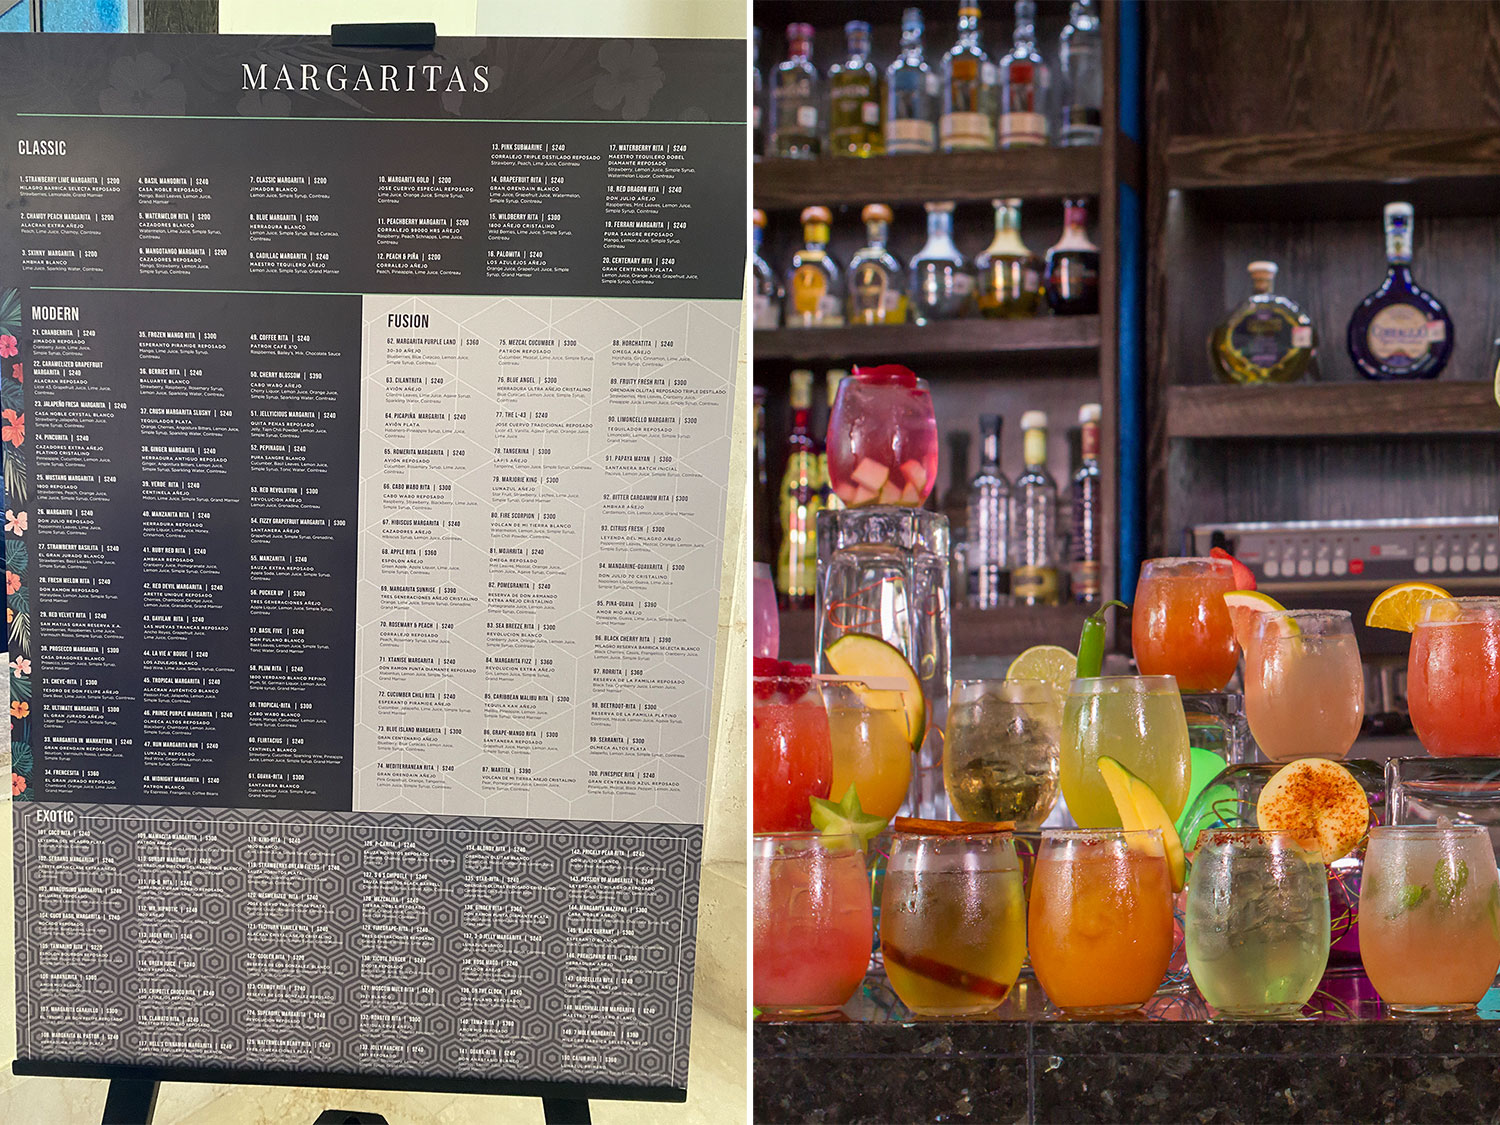 The menu at the JW Marriott showcasing 150 margarita recipes